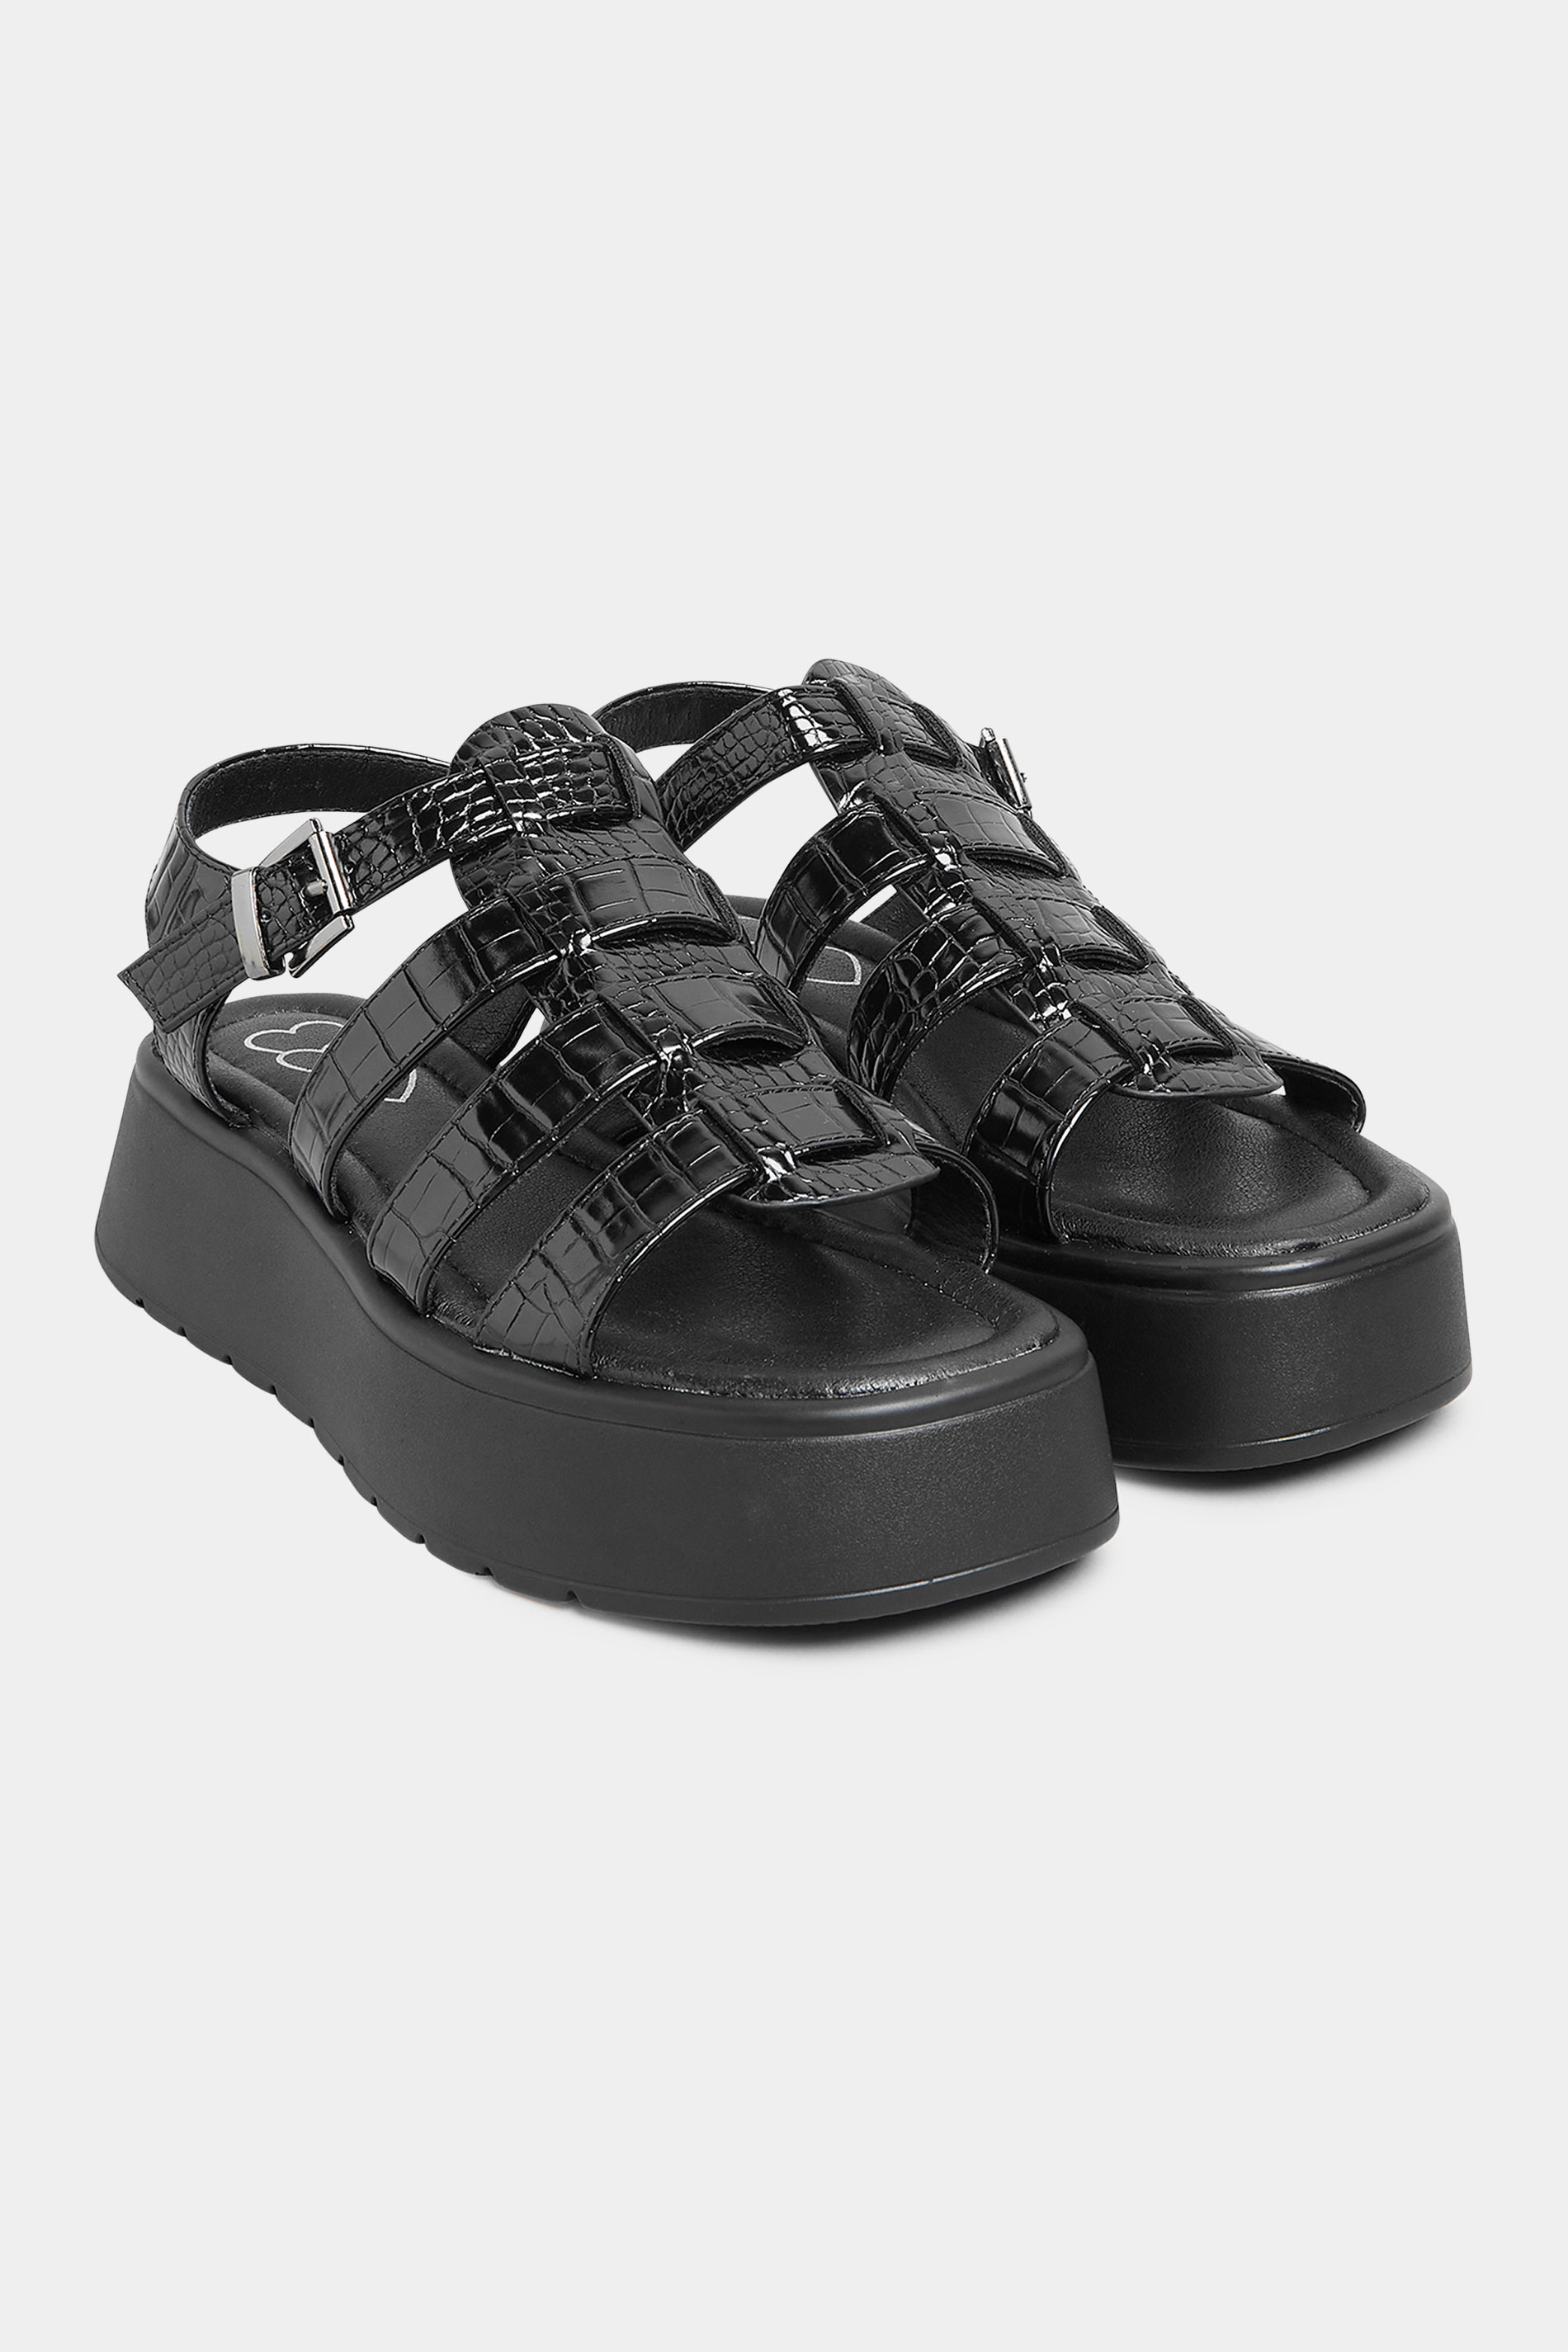 Grande taille  Shoes Grande taille  Sandals | PixieGirl Black Croc Gladiator Platform Sandals In Standard D Fit - XM21409